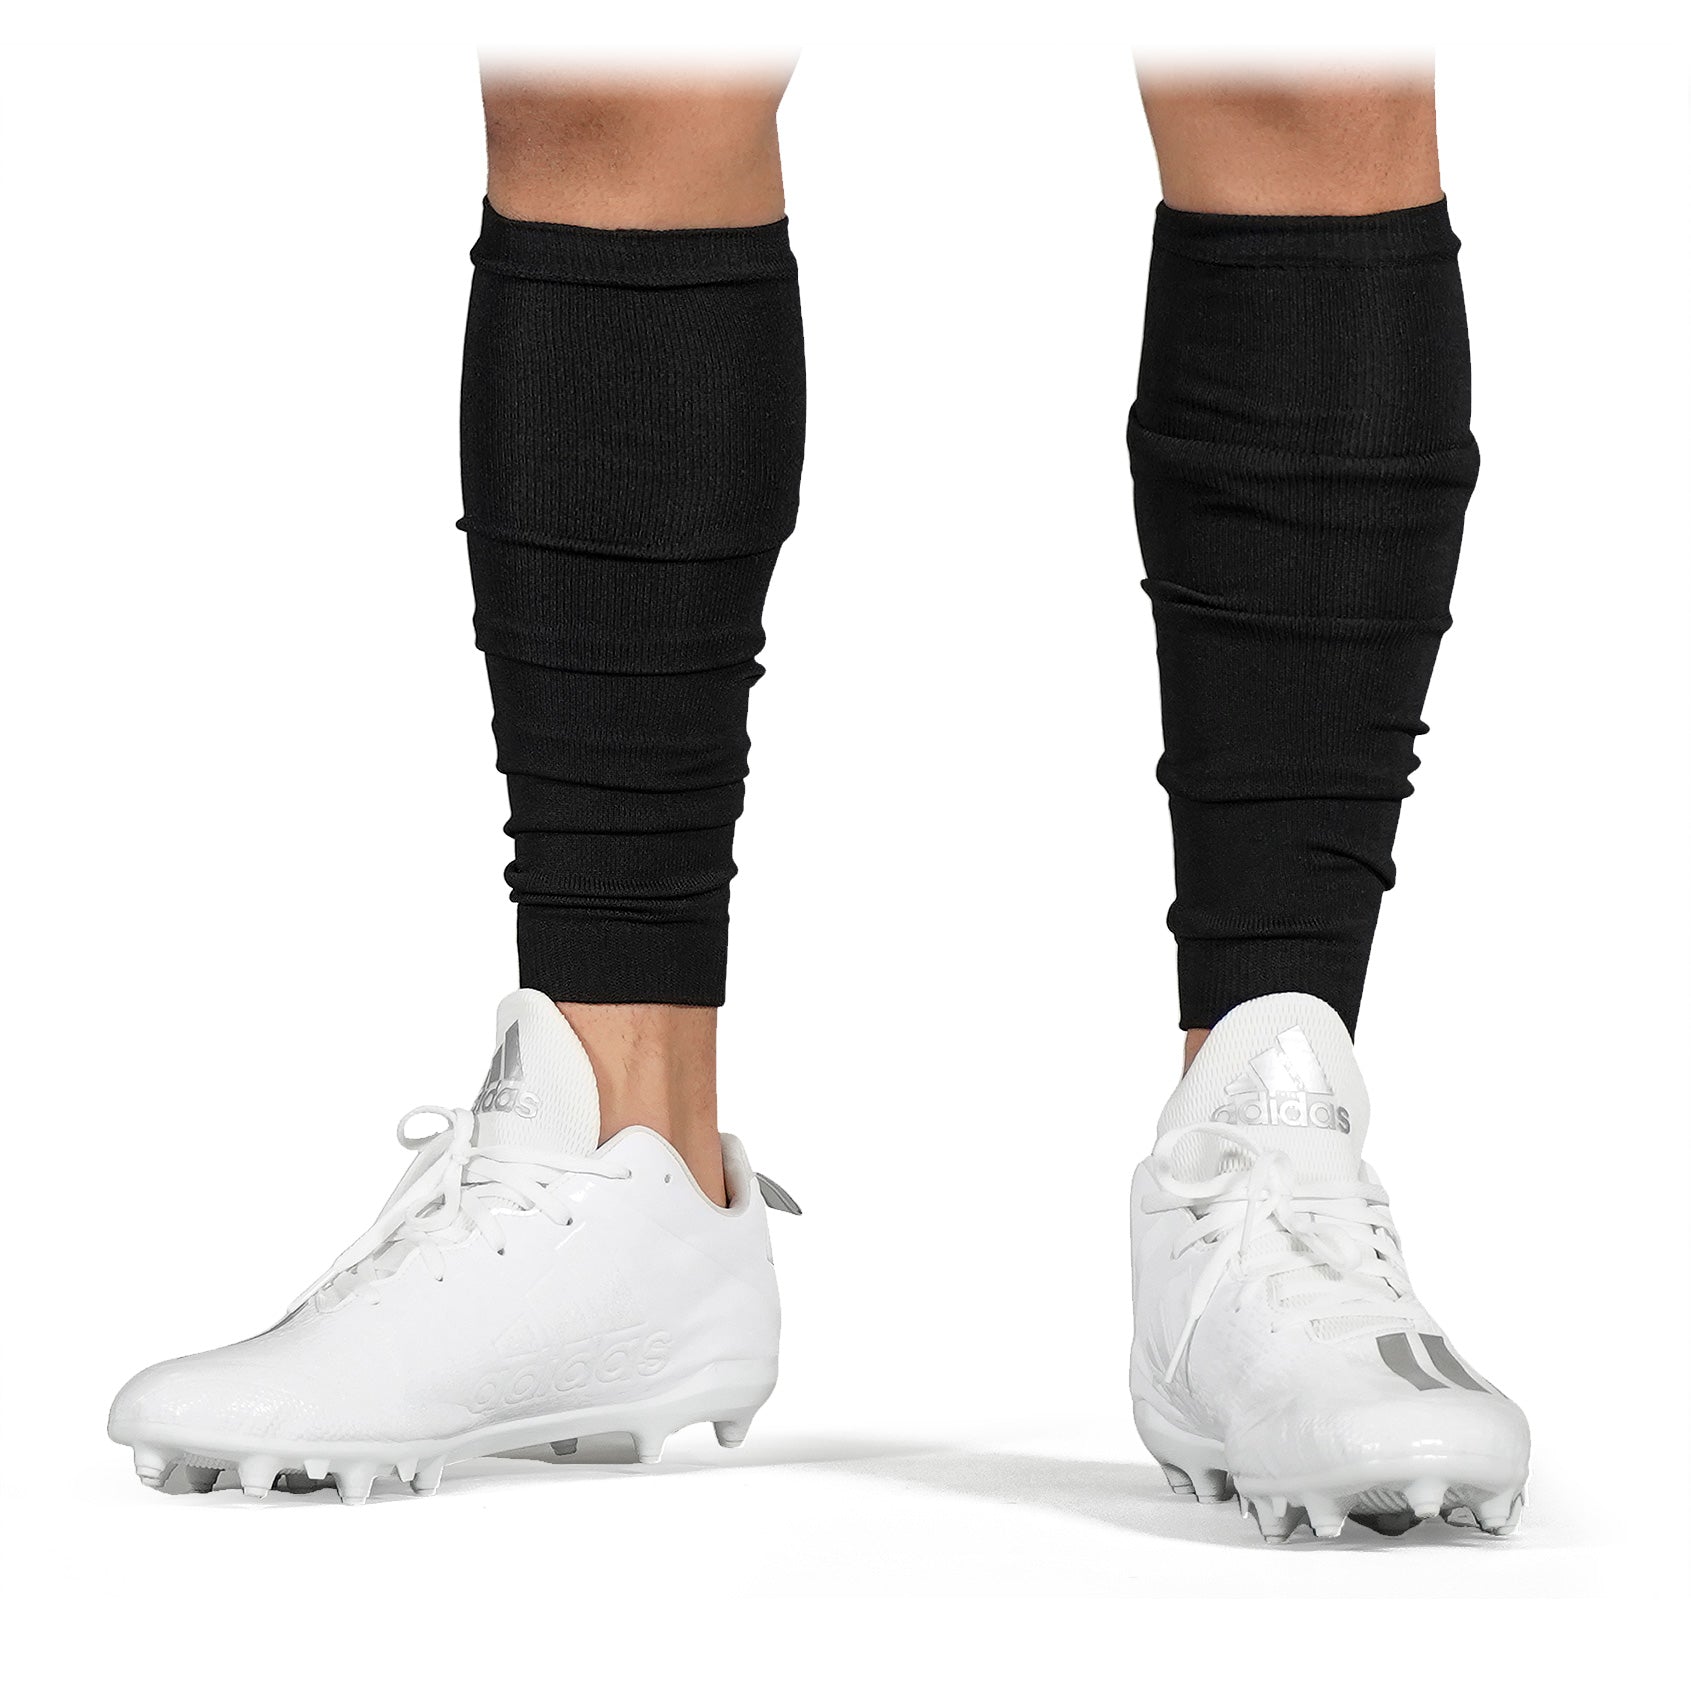 Nxtrnd Football Leg Sleeves Calf Sleeve Men & Boys Leg Warmers